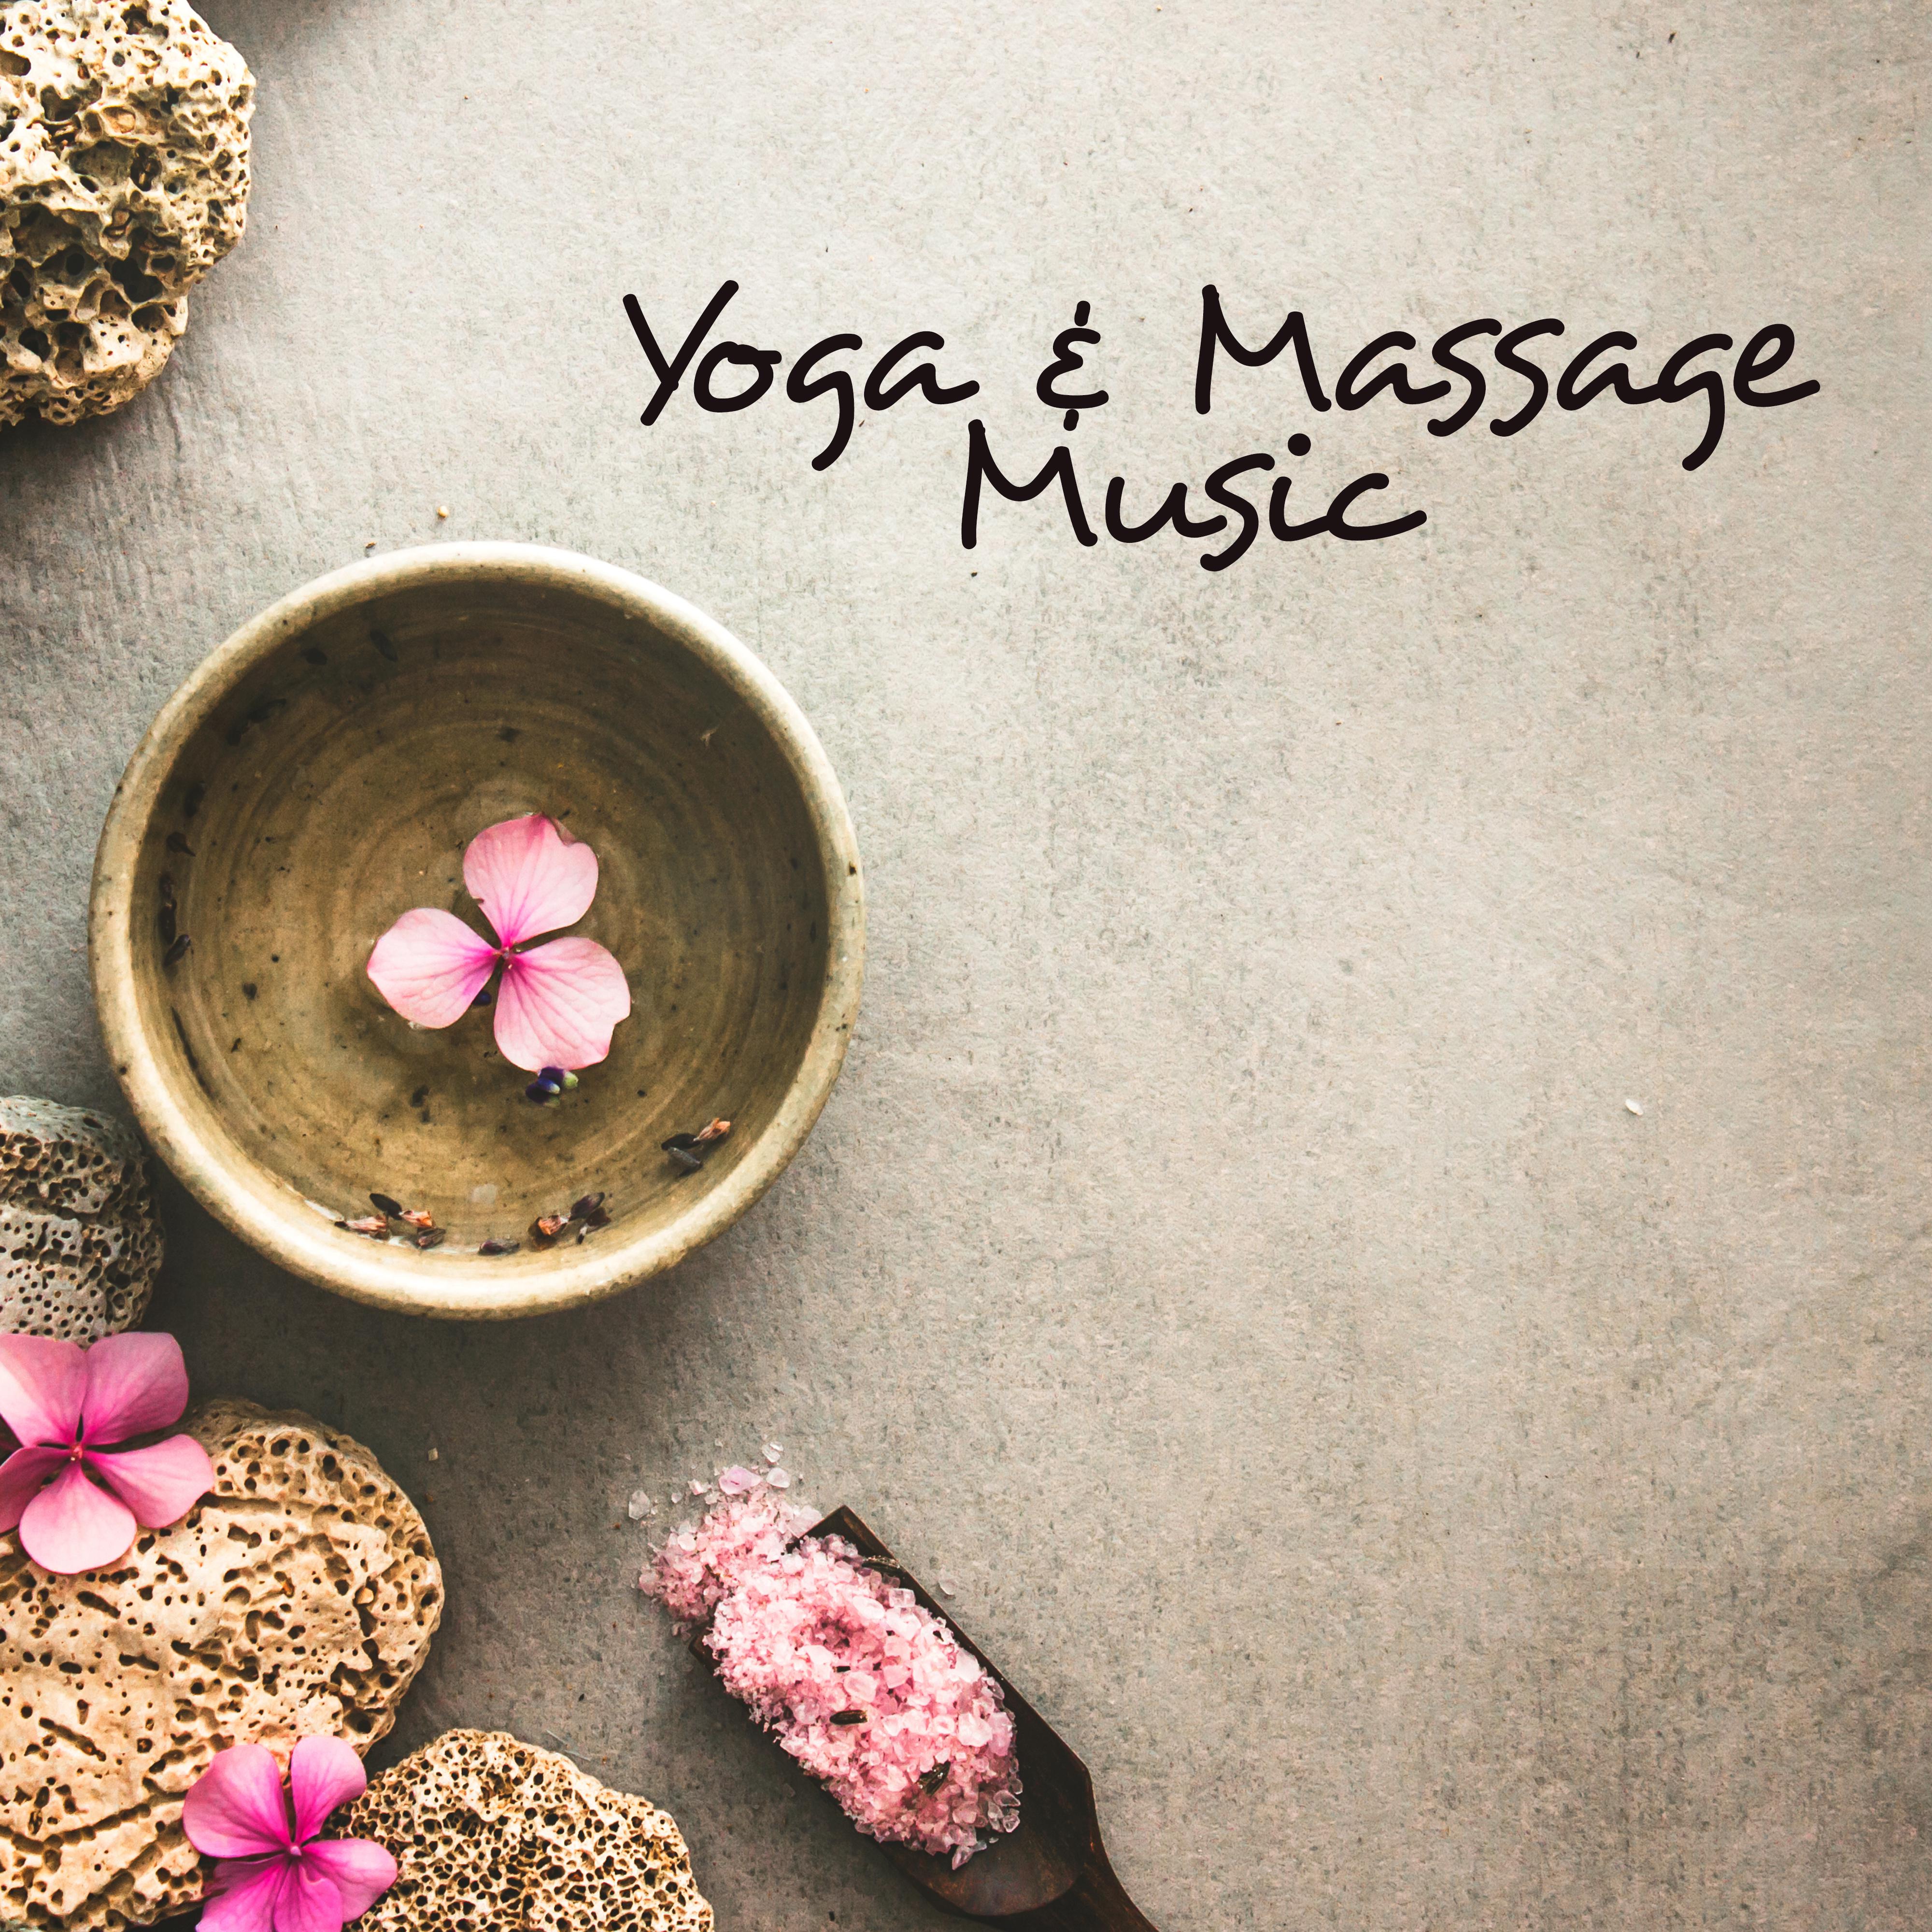 Yoga & Massage Music – Relaxing Sounds for Spa, Wellness, Healing Meditation, Deep Harmony, Sleep Ambience, Meditation Music to Calm Down, Reduce Stress, Reiki